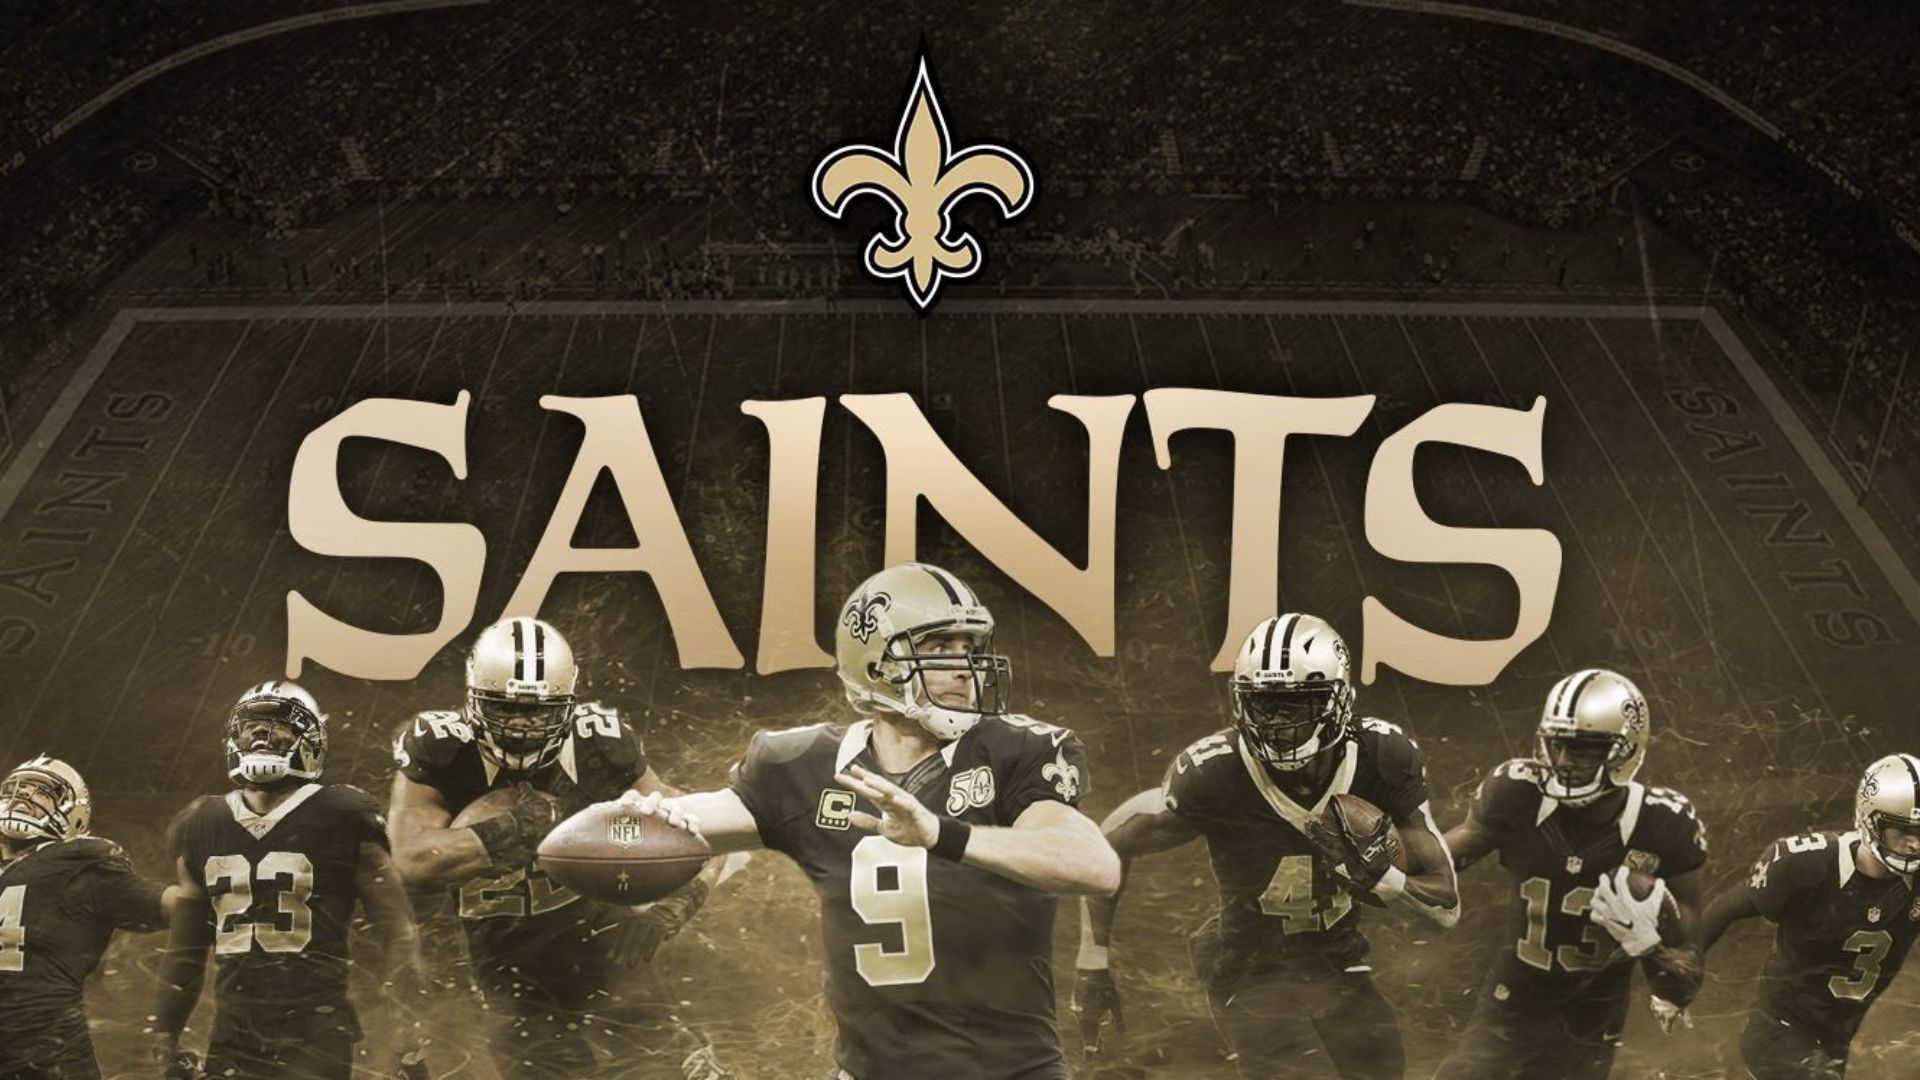 1920x1080 New Orleans Saints Wallpapers Top 25 Best New Orleans Saints Backgrounds Download